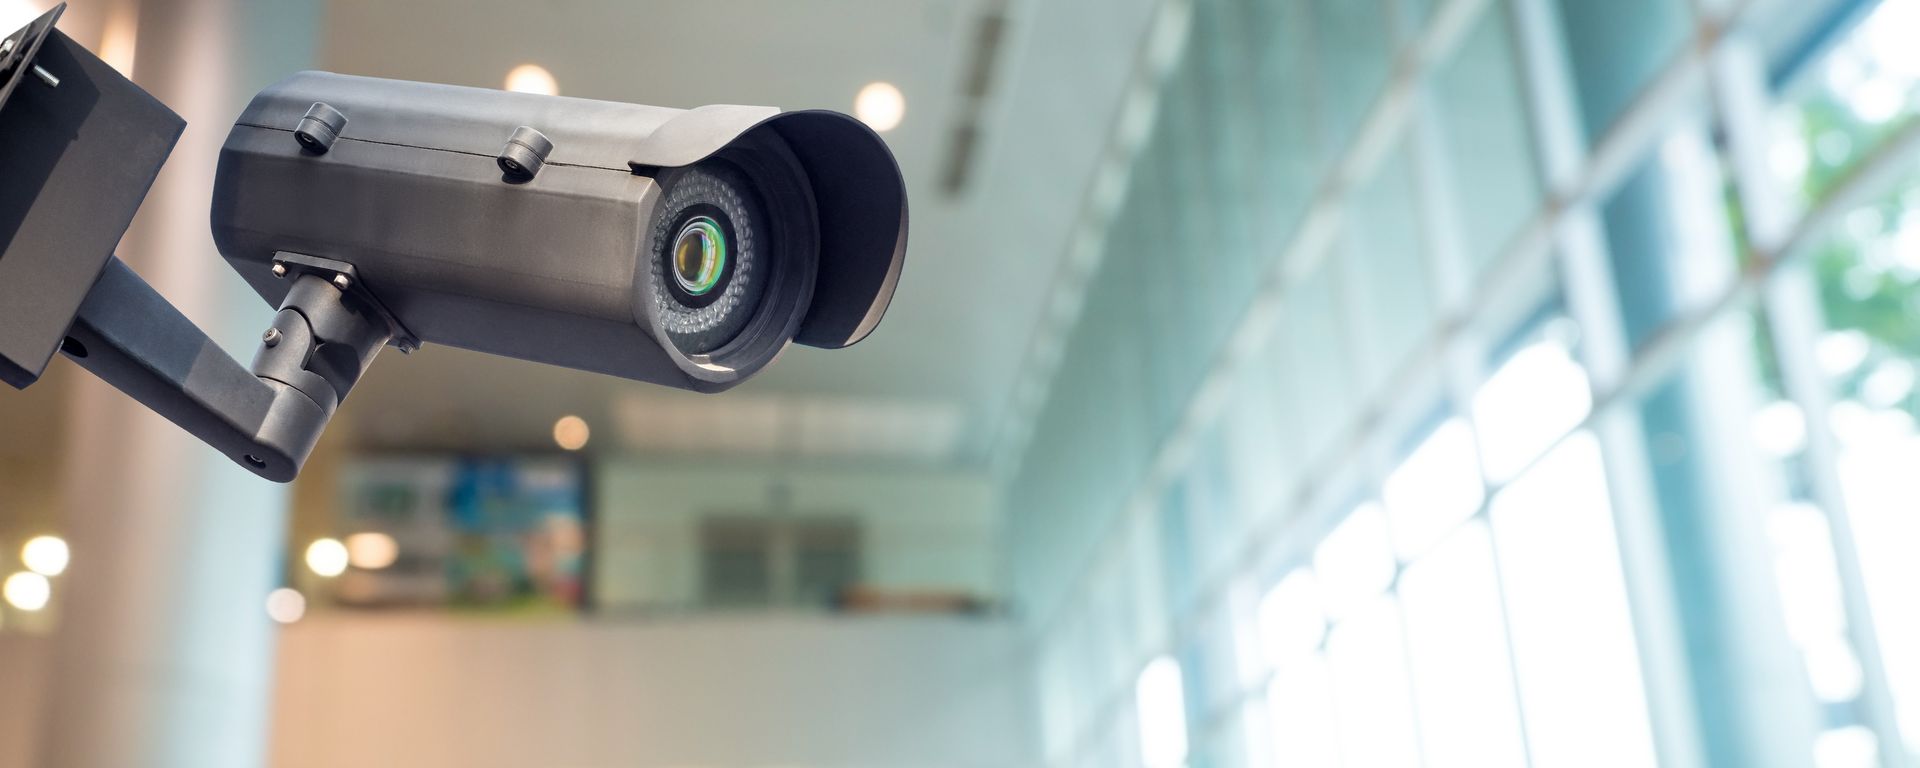 Detect anomalous behavior using security surveillance video streams